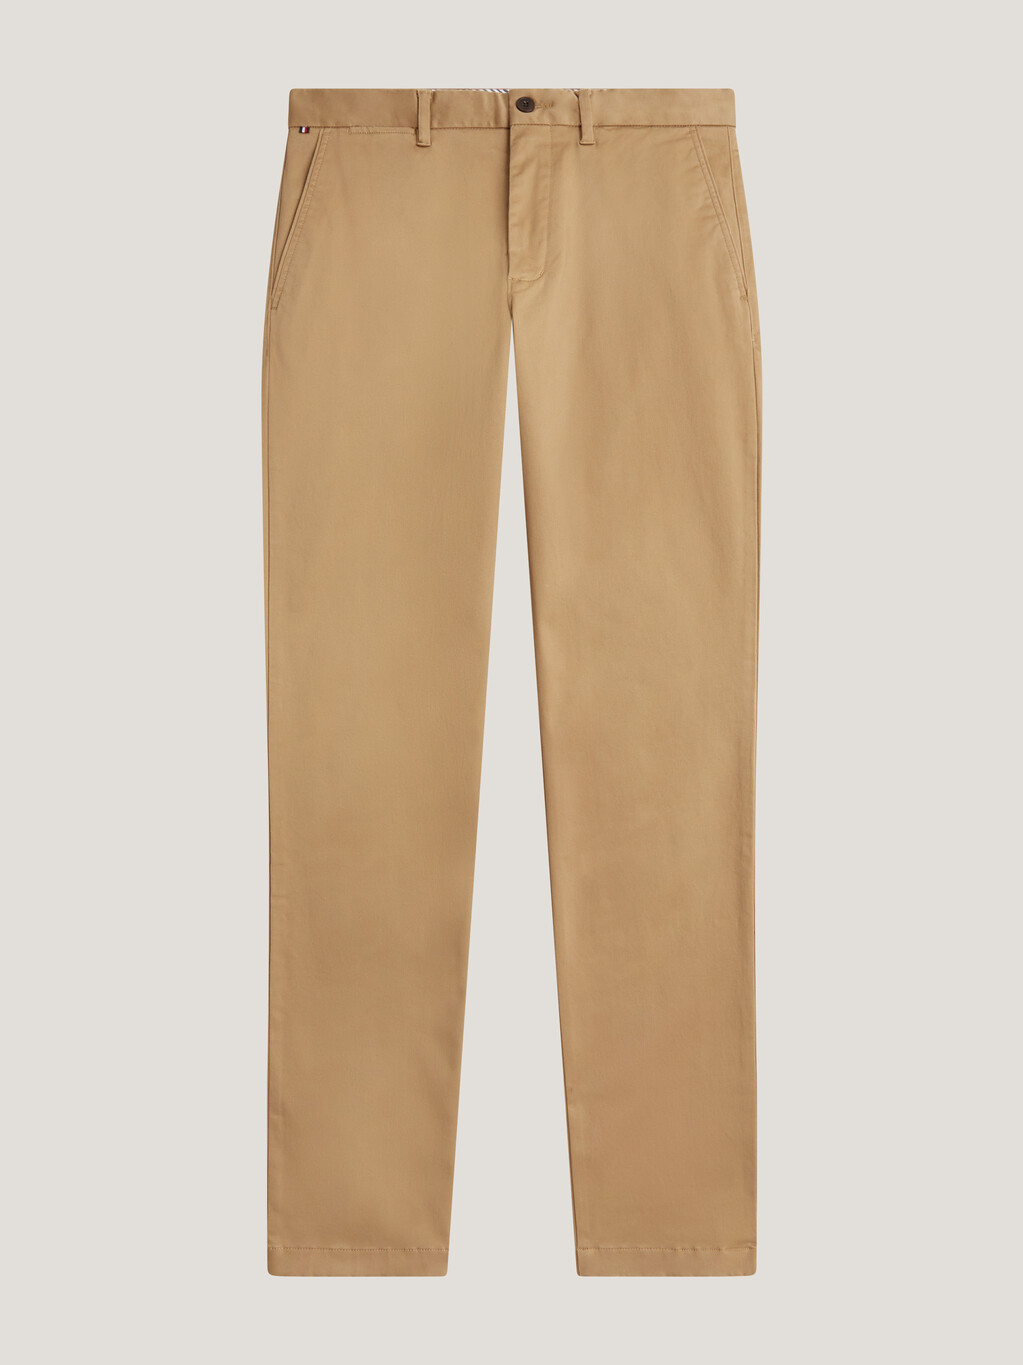 NWOT Valentini Mens Pants 32 (34”) Solid Tan Cotton Stretch Blend Khaki  Trousers